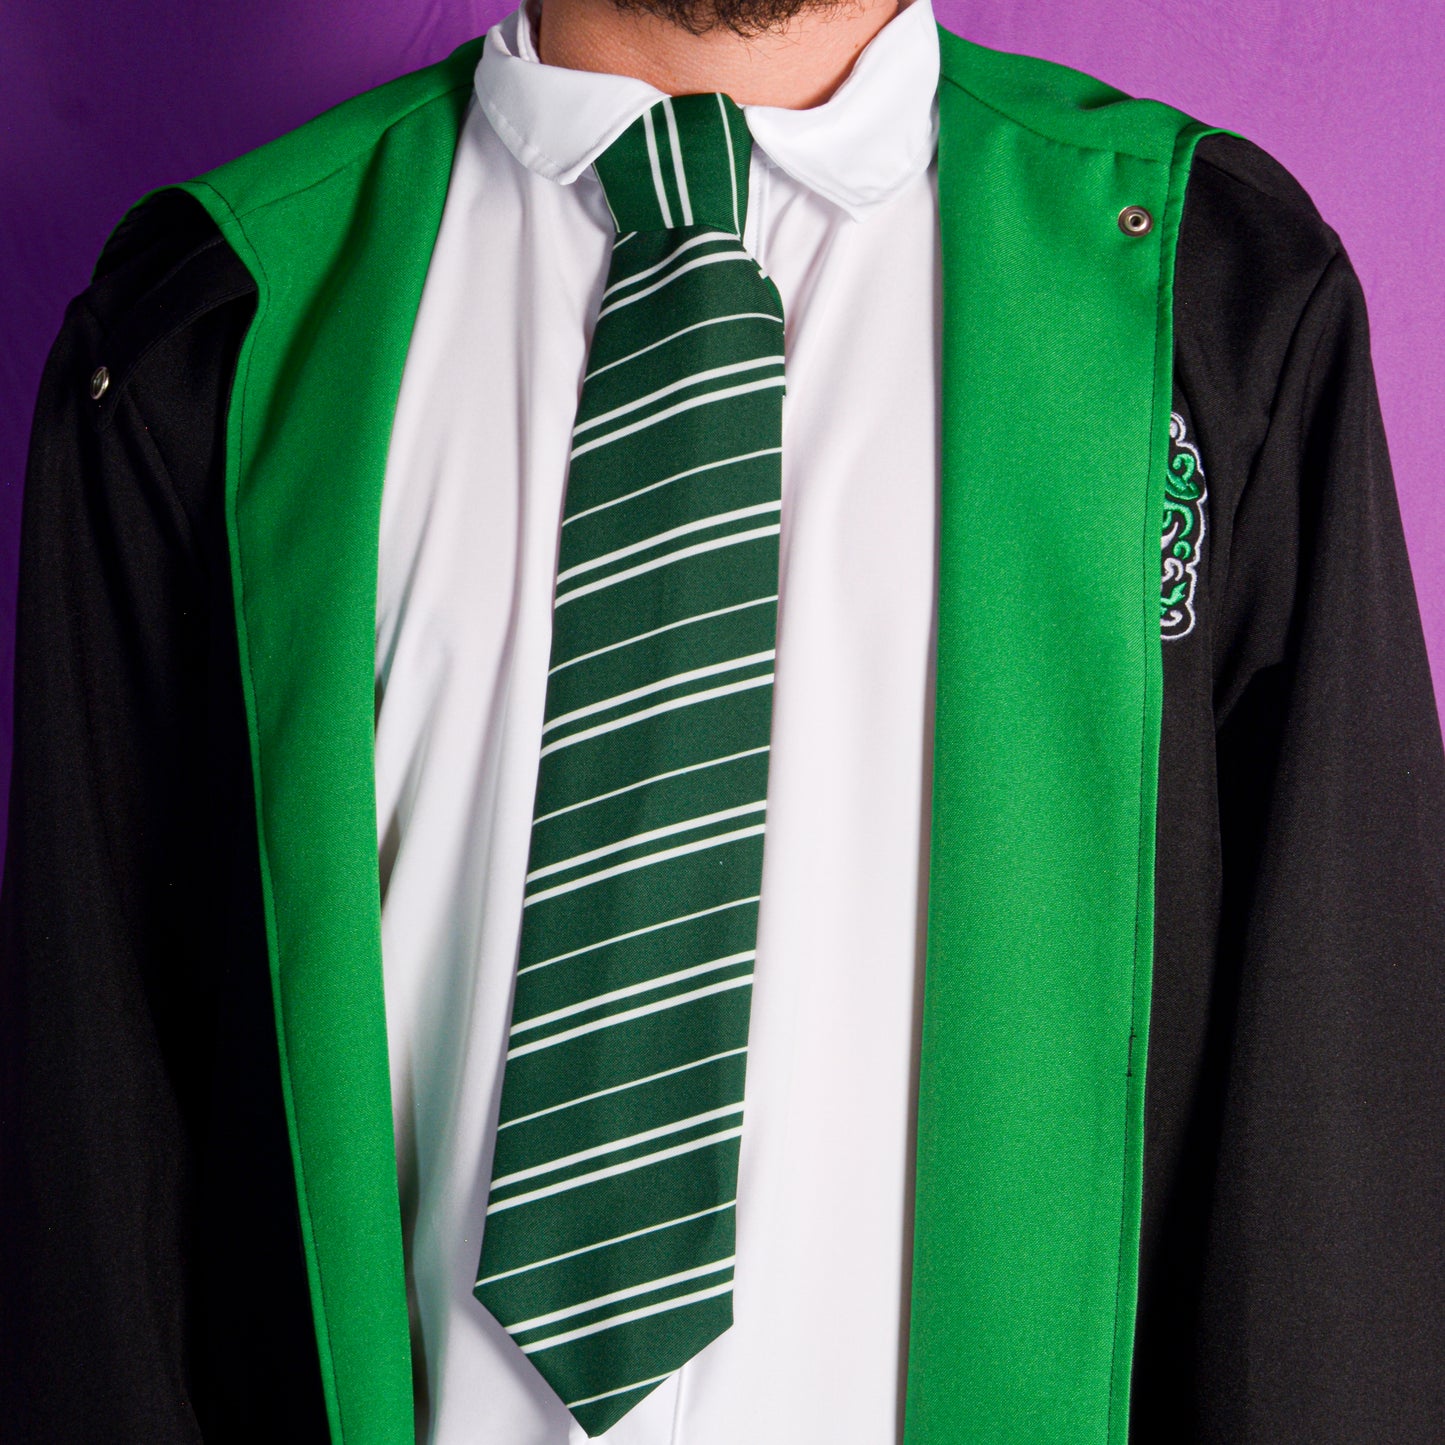 Uniforme completo Slytherin (Capa- camisa- pantalón-corbata - totebag)